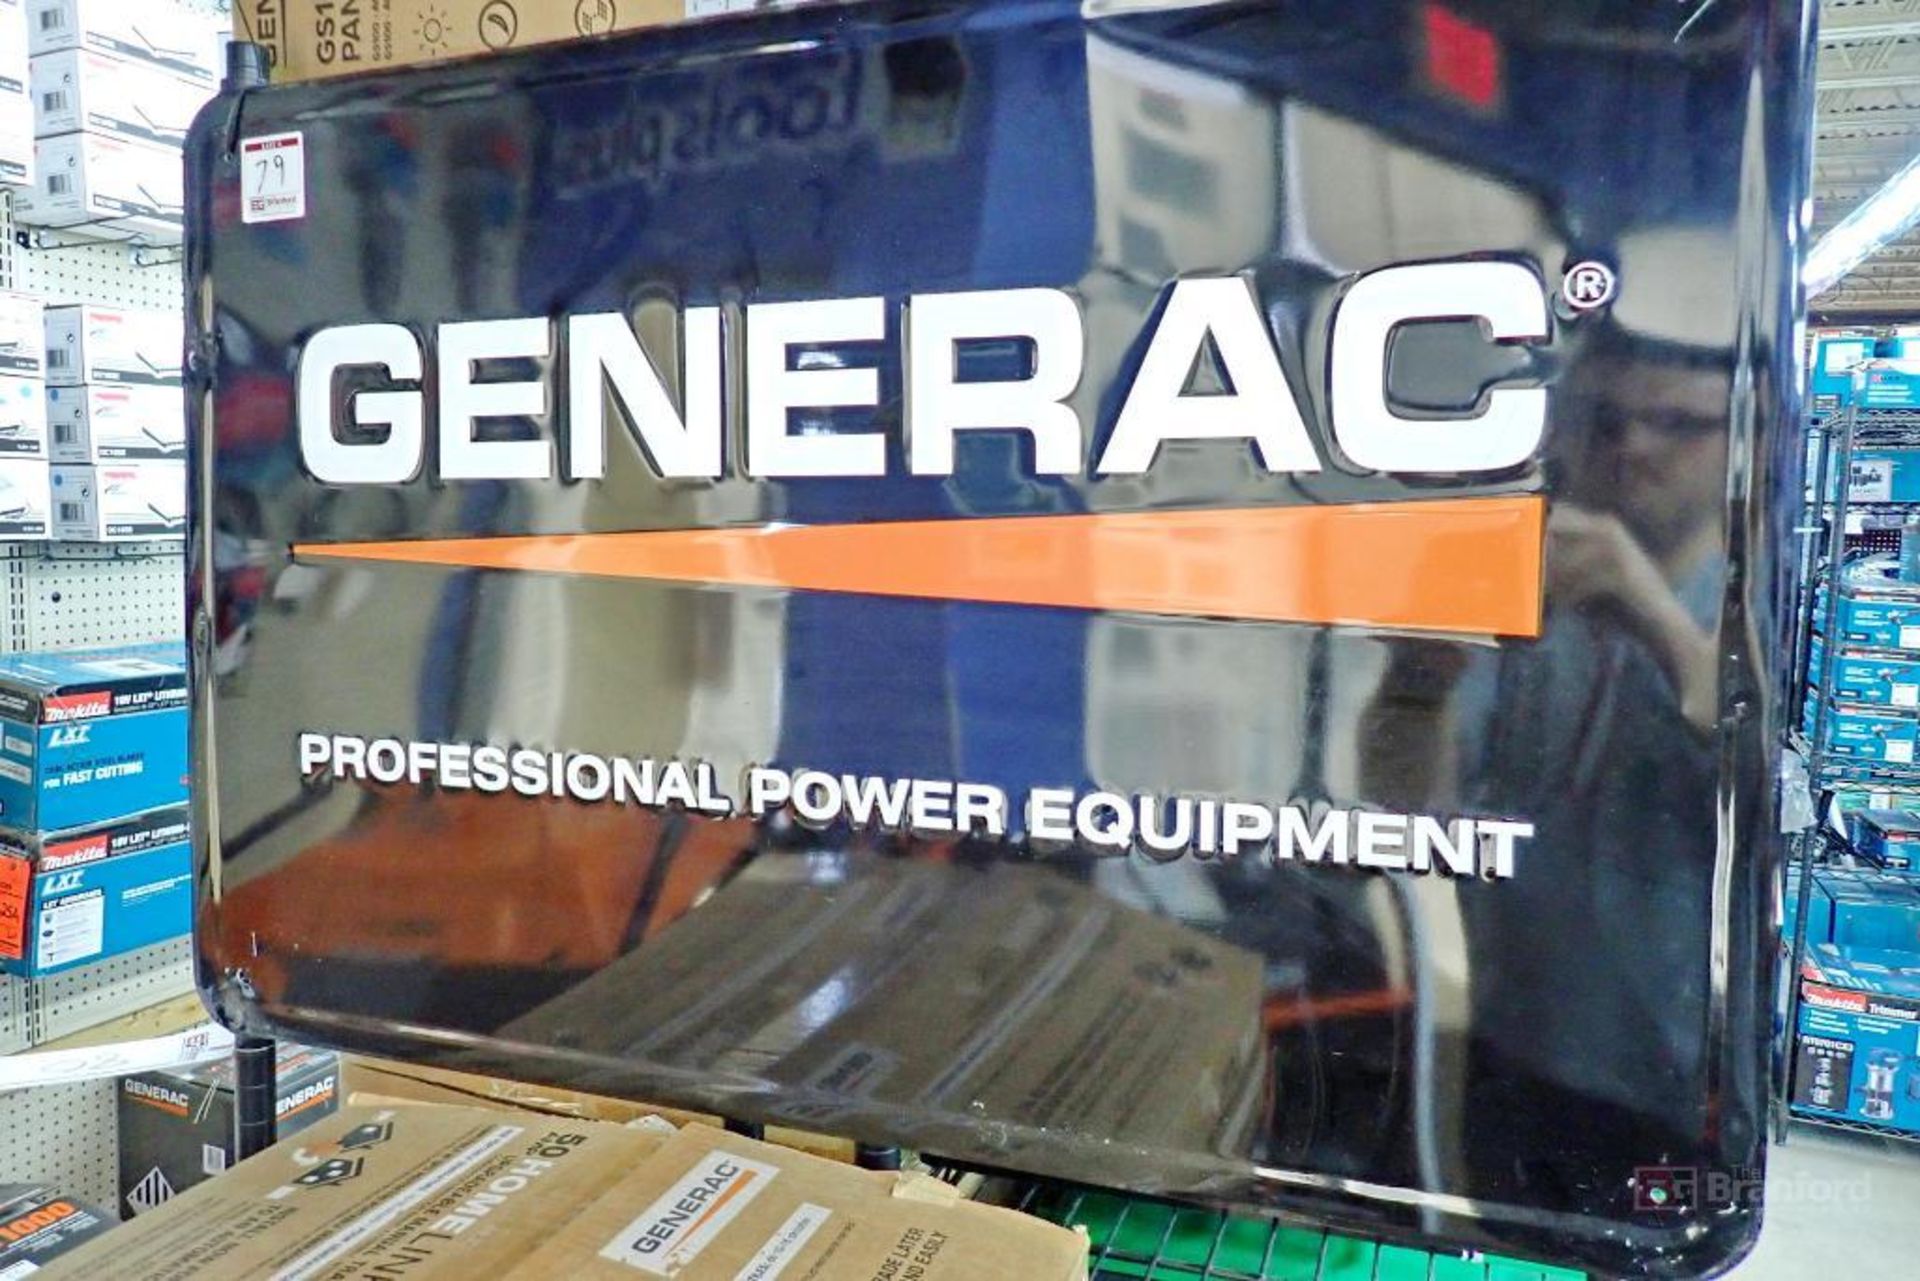 GENERAC Professional Power Equipment Sign - Image 3 of 3